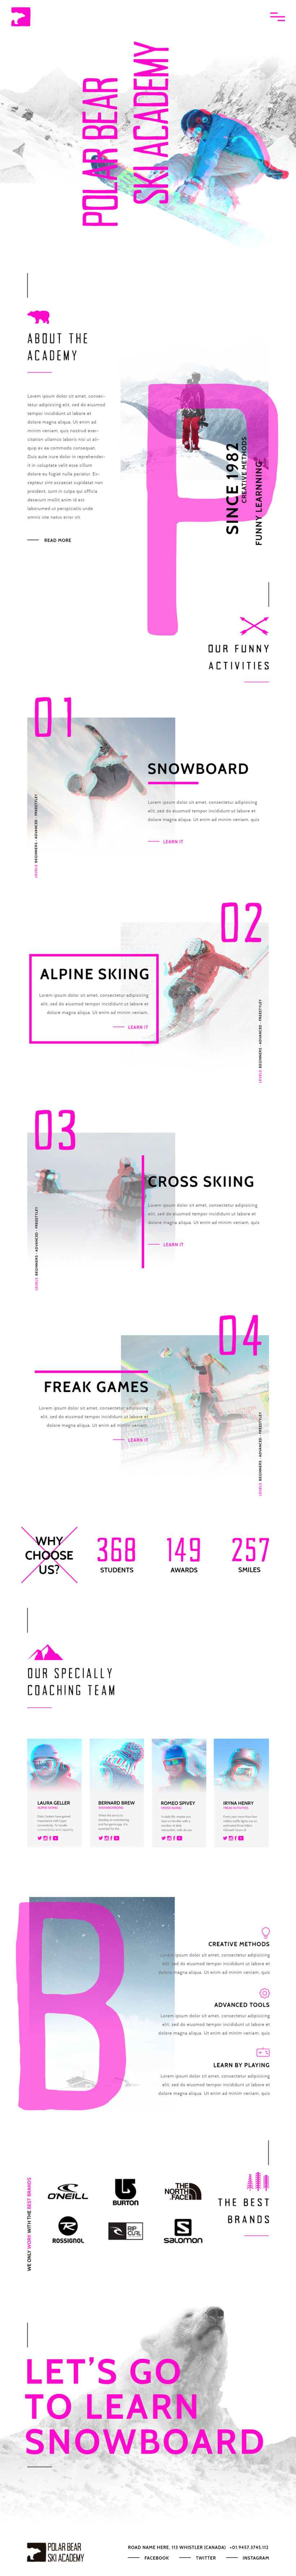 Ski Academy Web Design Concept 0